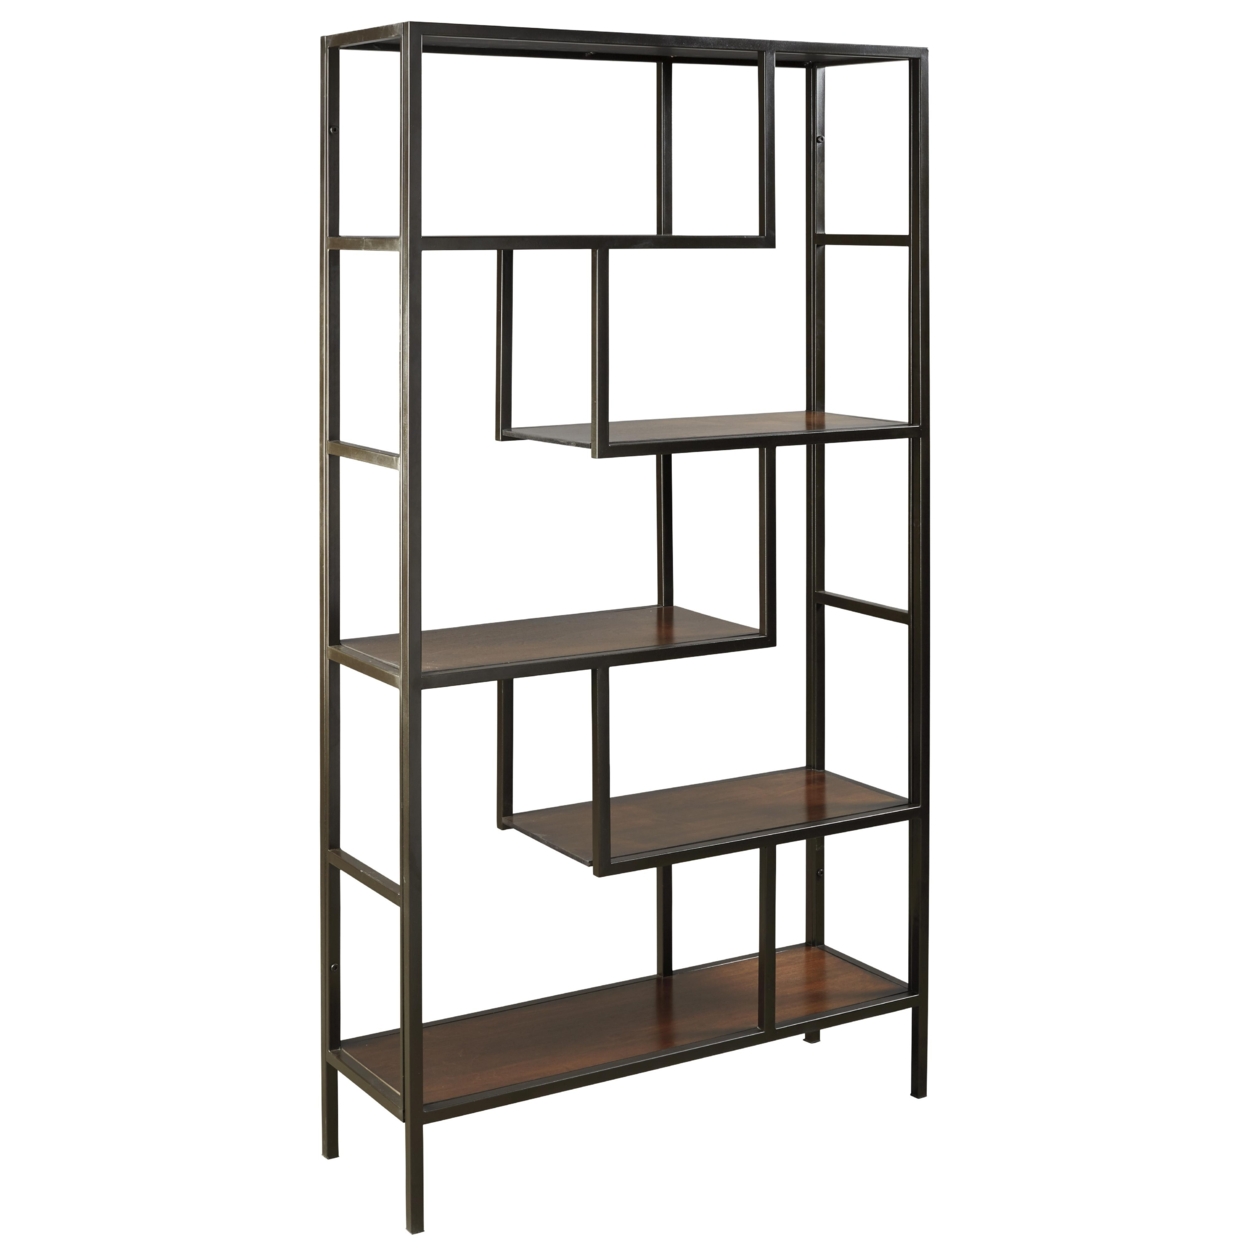 5 Shelves Asymmetric Design Bookcase With Metal Frame, Brown And Black- Saltoro Sherpi